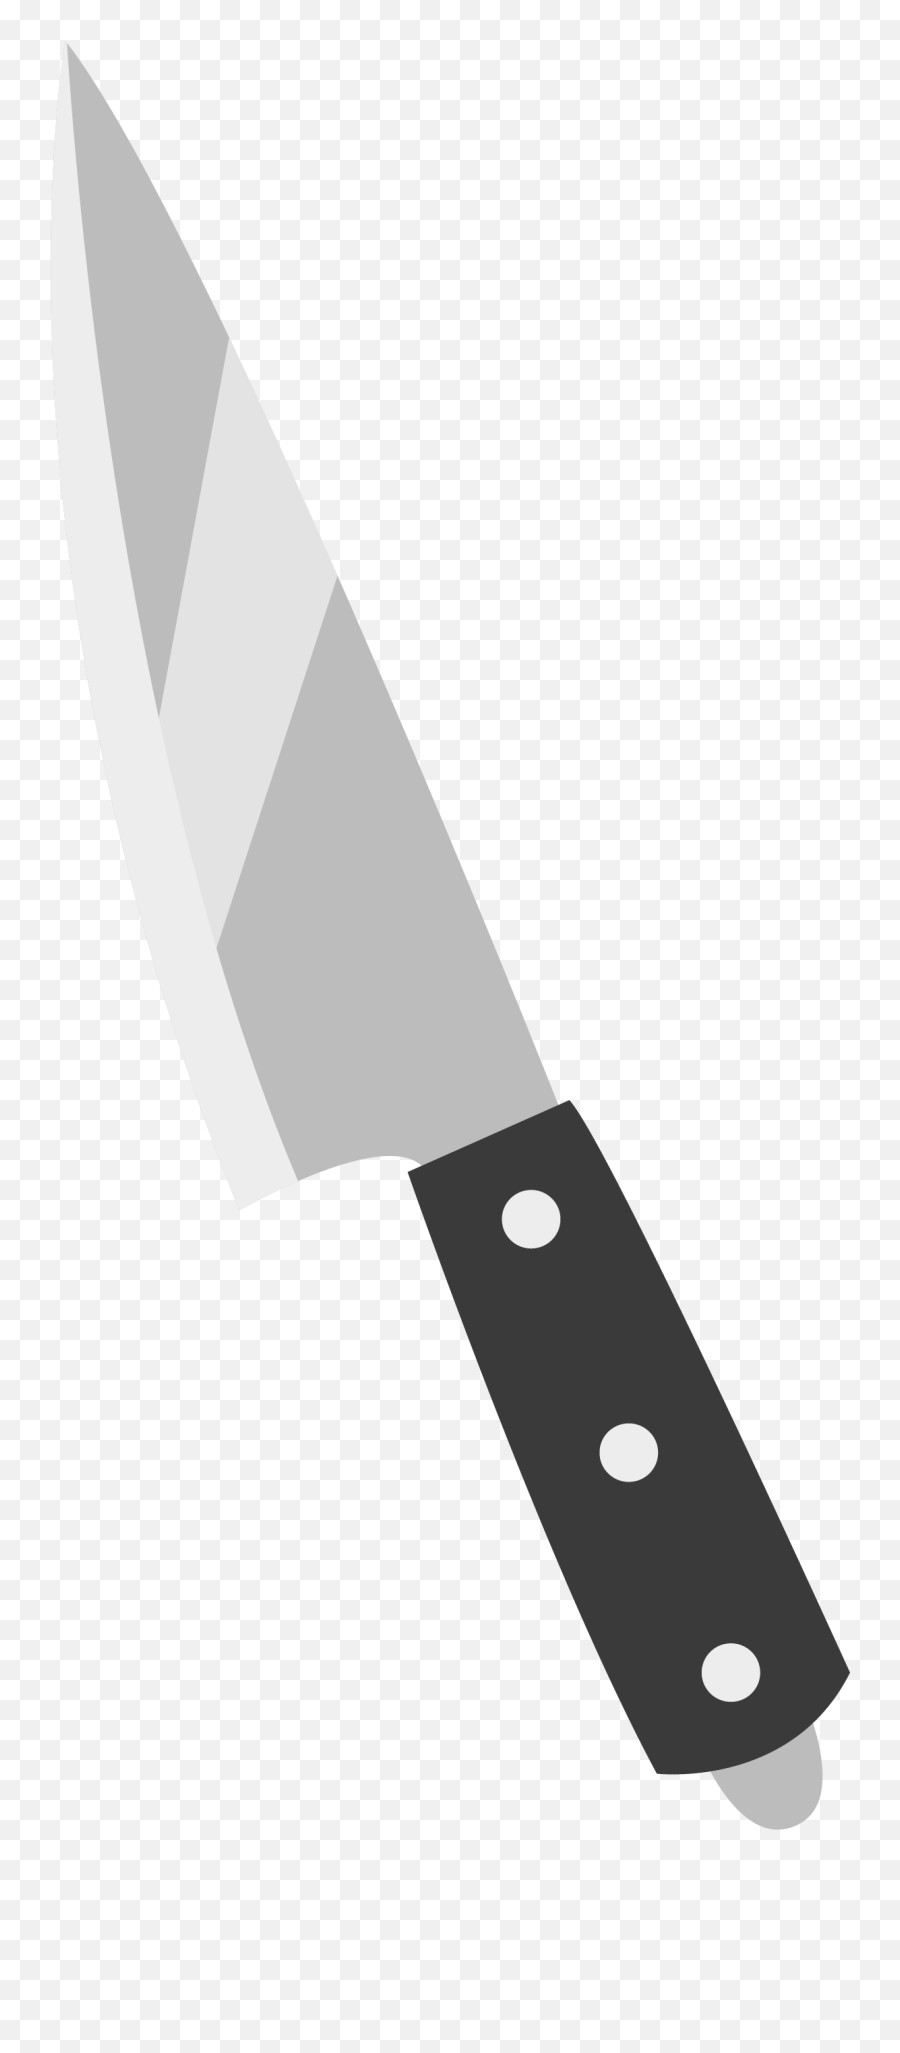 Qopo - Utility Knife Emoji,Fruit Knife Emoji